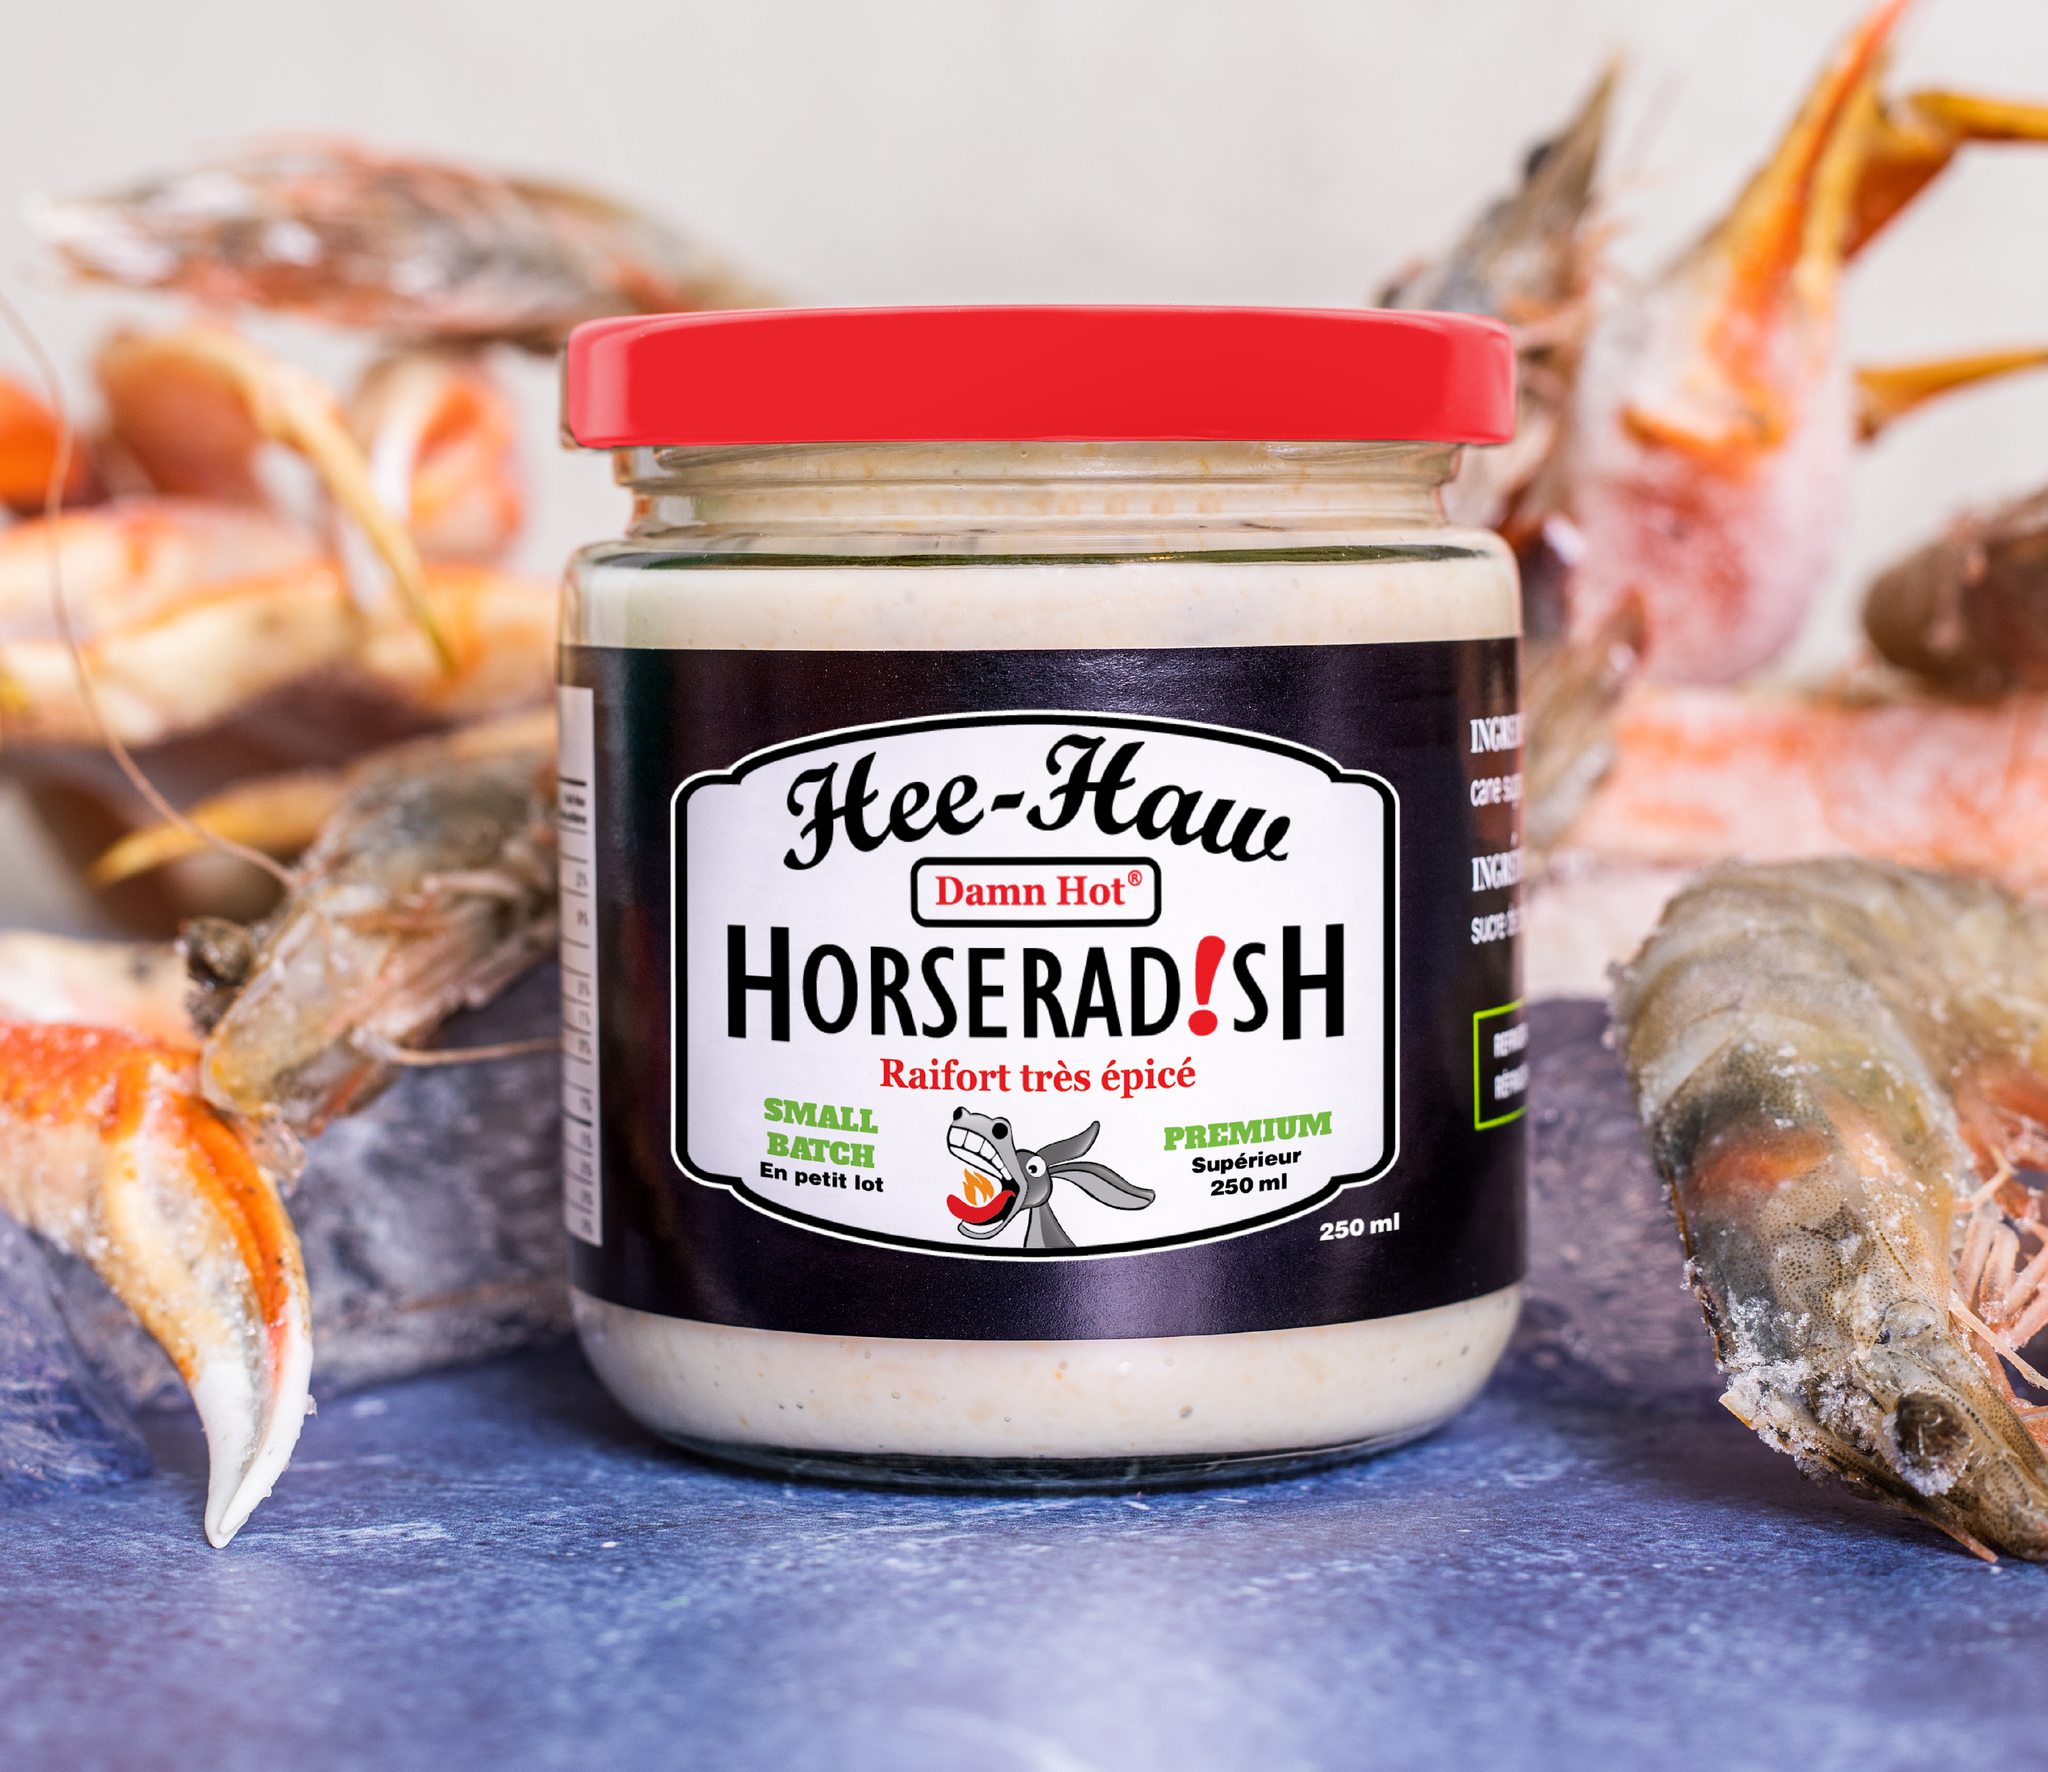 Crab Legs with Horseradish Sauce